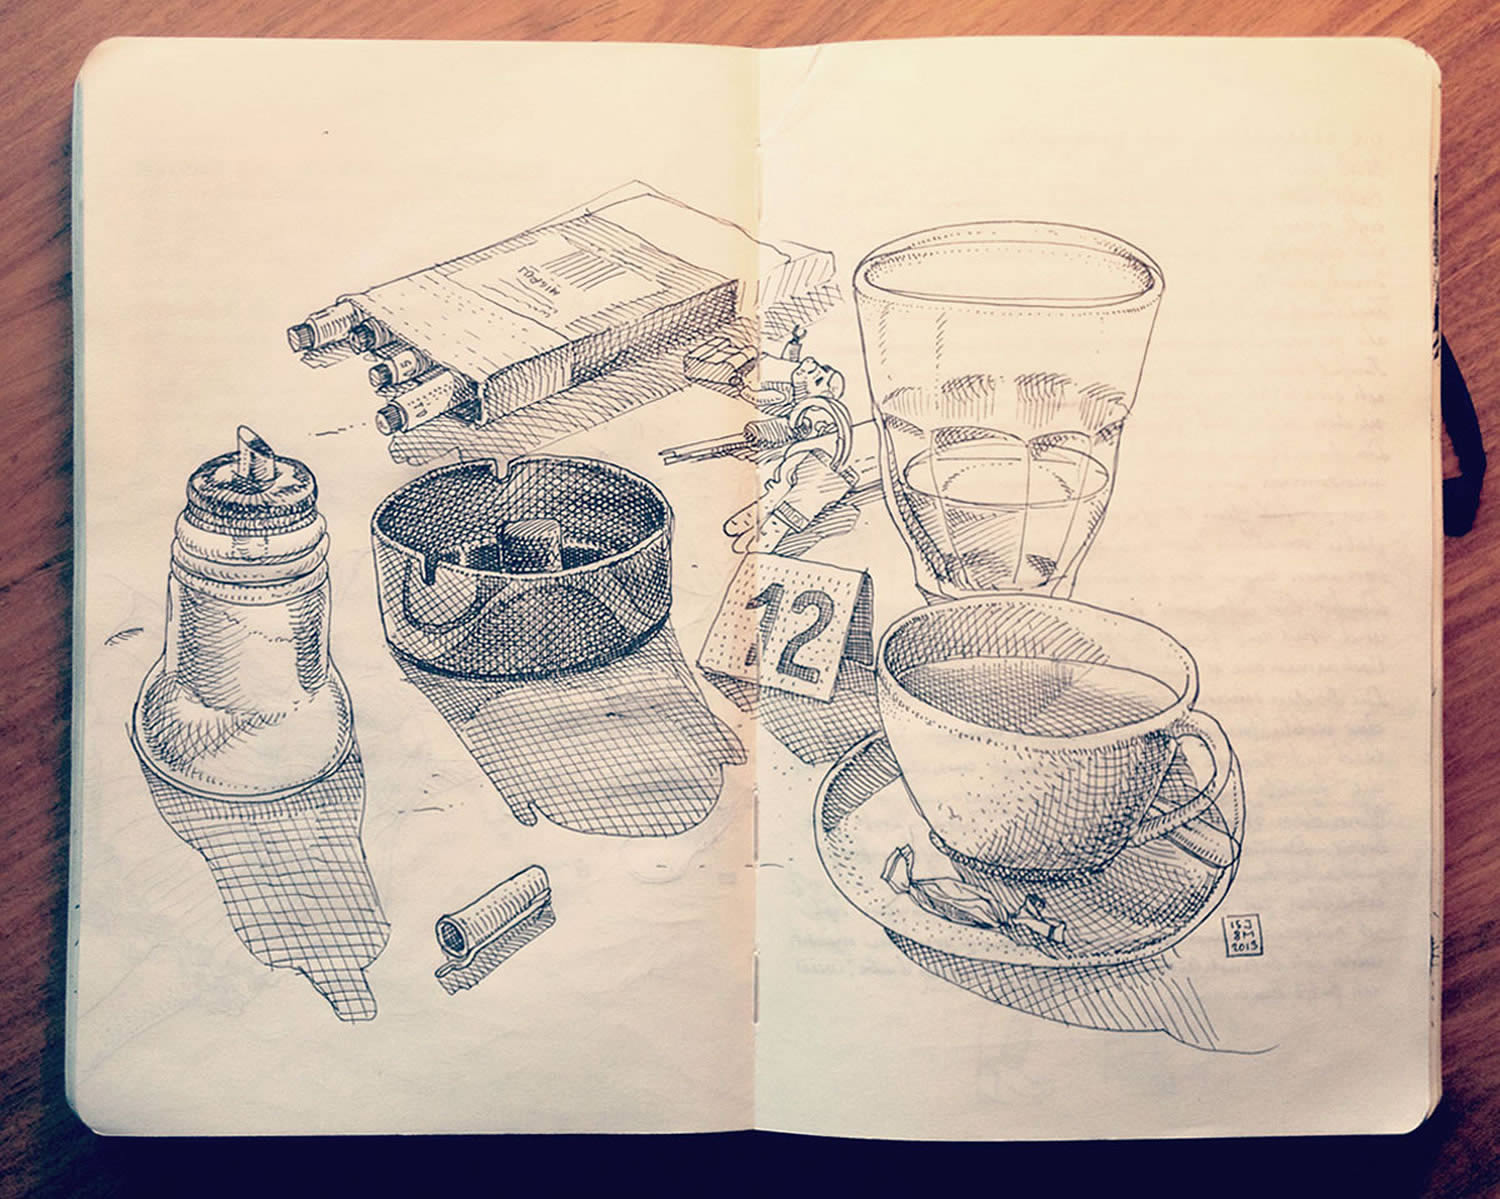 coffee and smokes, cigs, sketchbook drawing by Jared Muralt